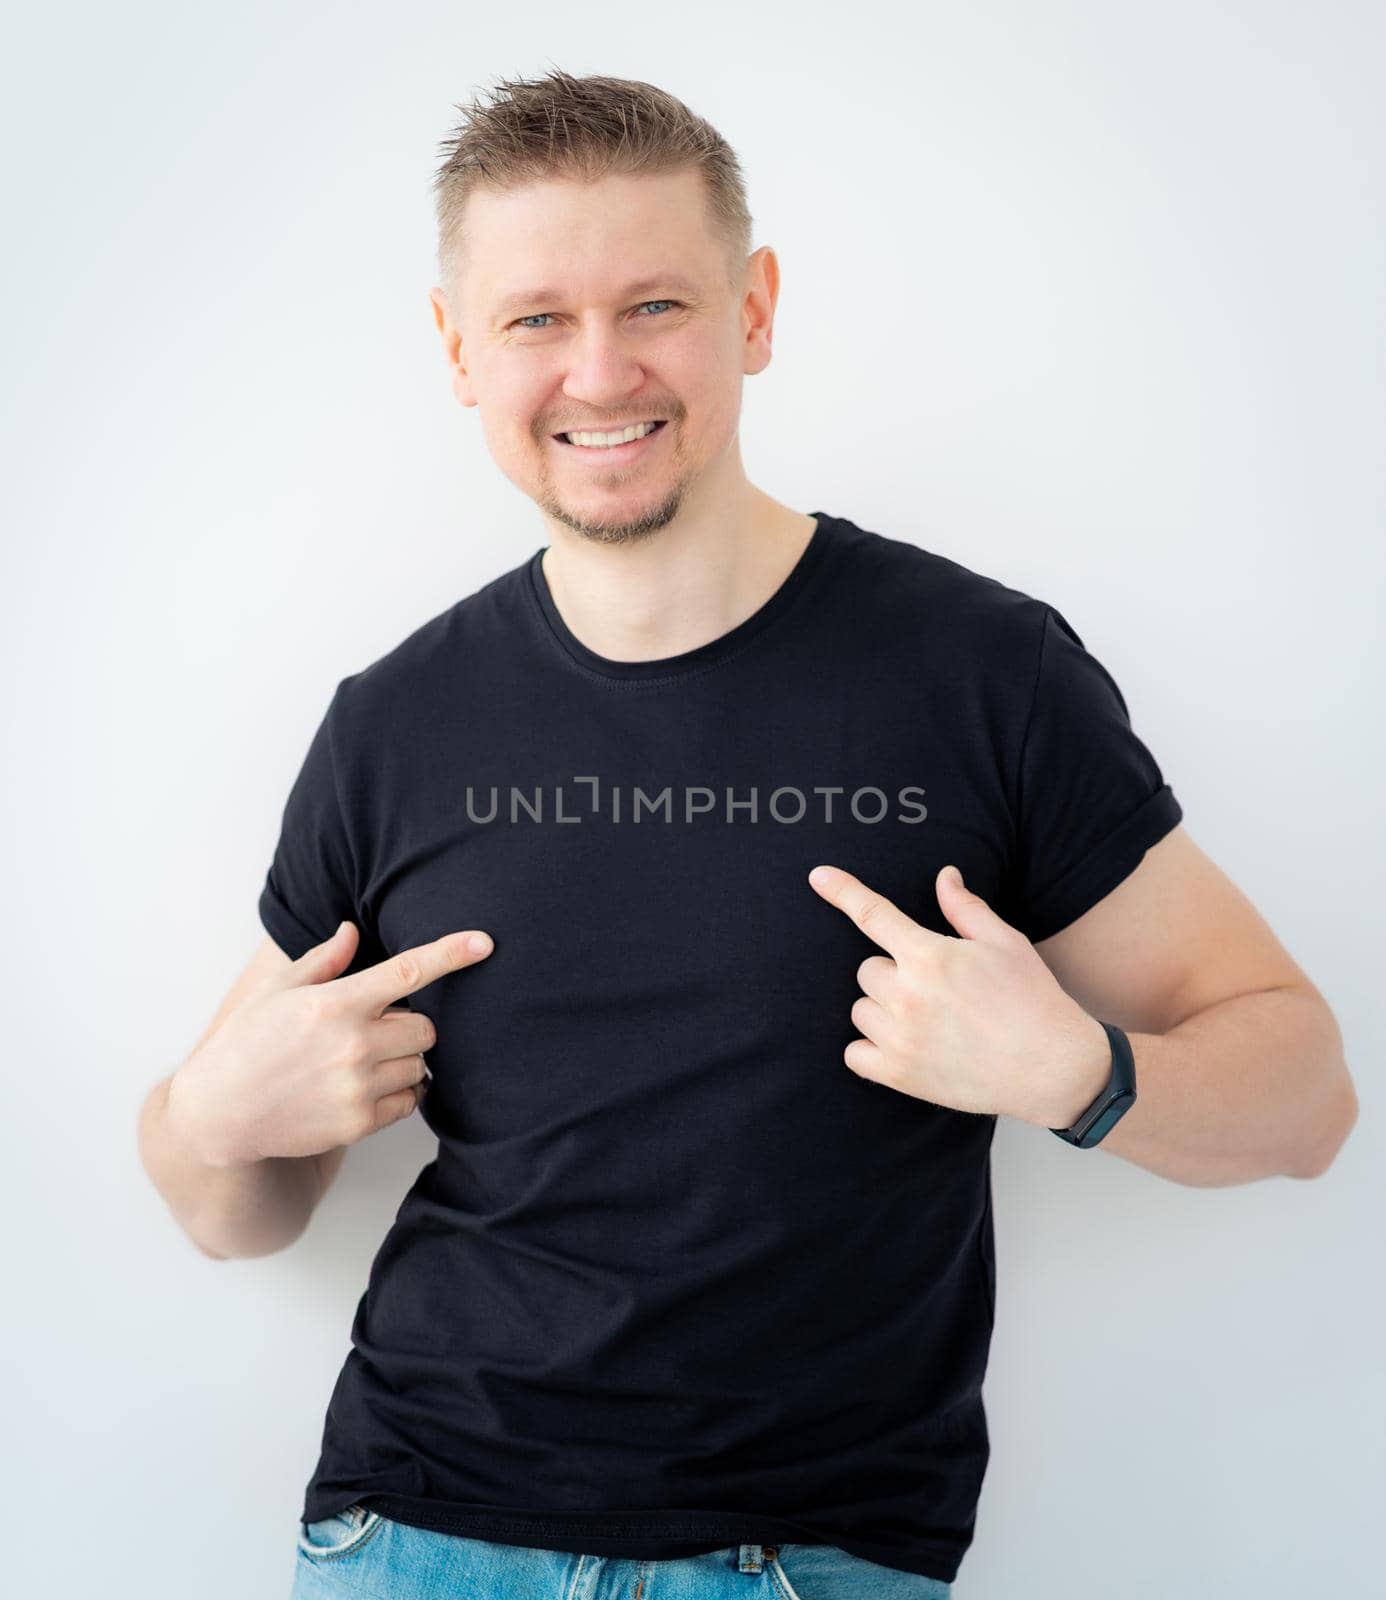 Attractive man pointing at blank black t-shirt